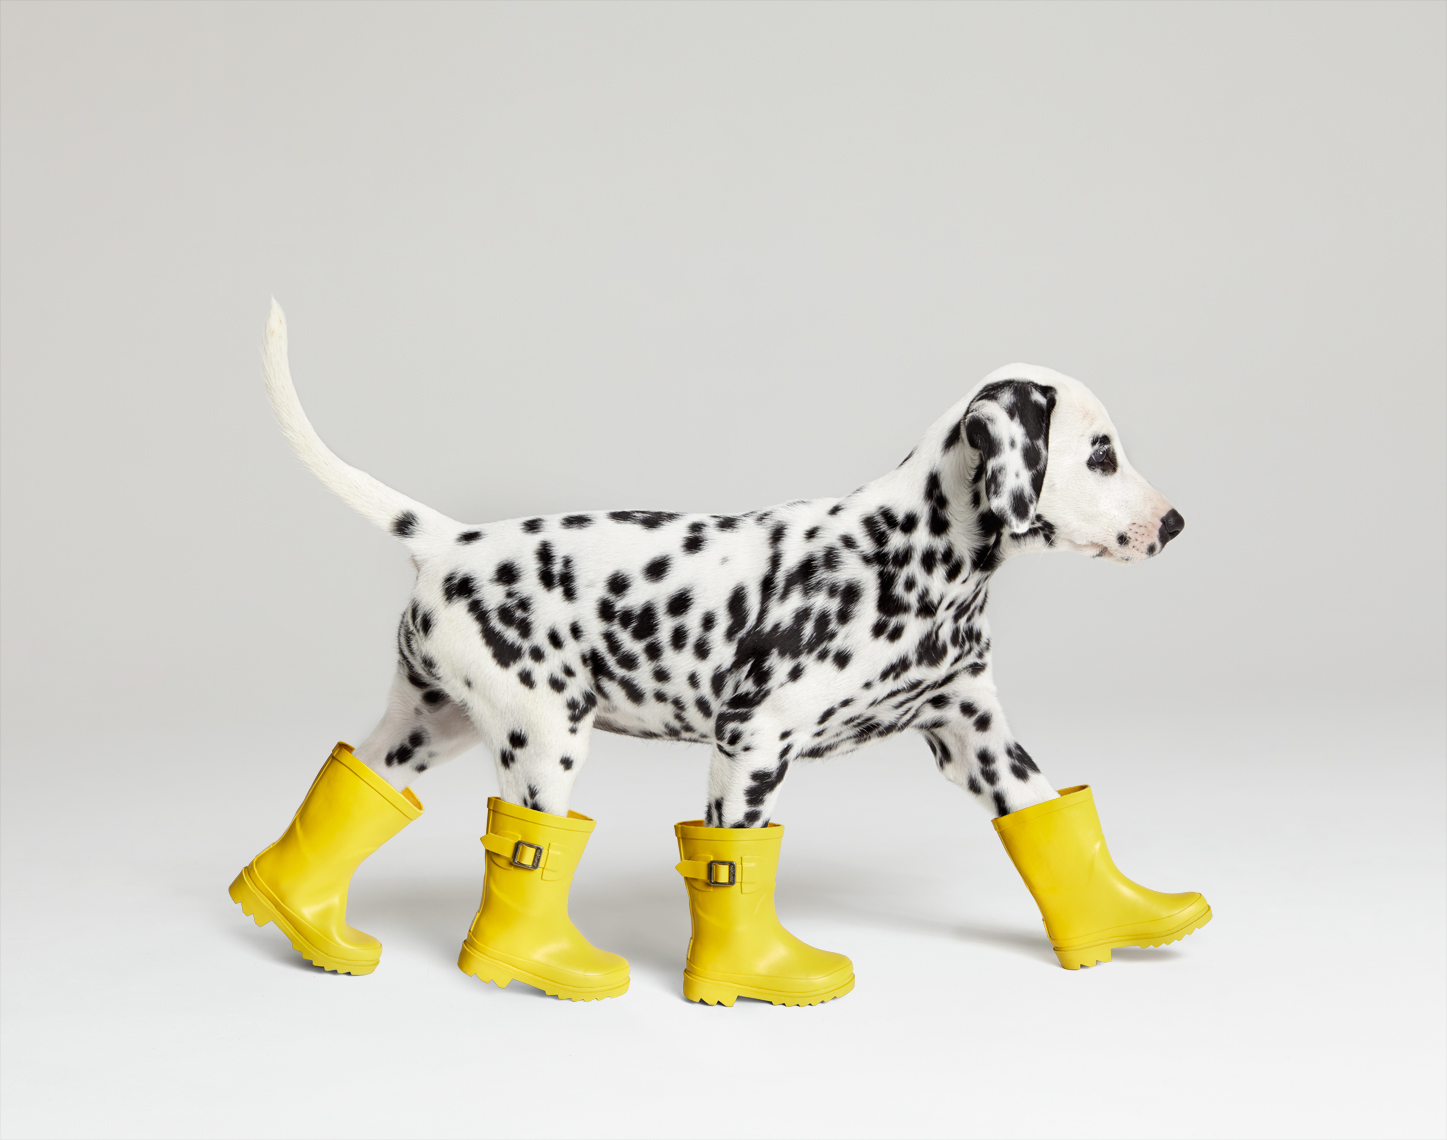 Dalamtian with yellow rain boots